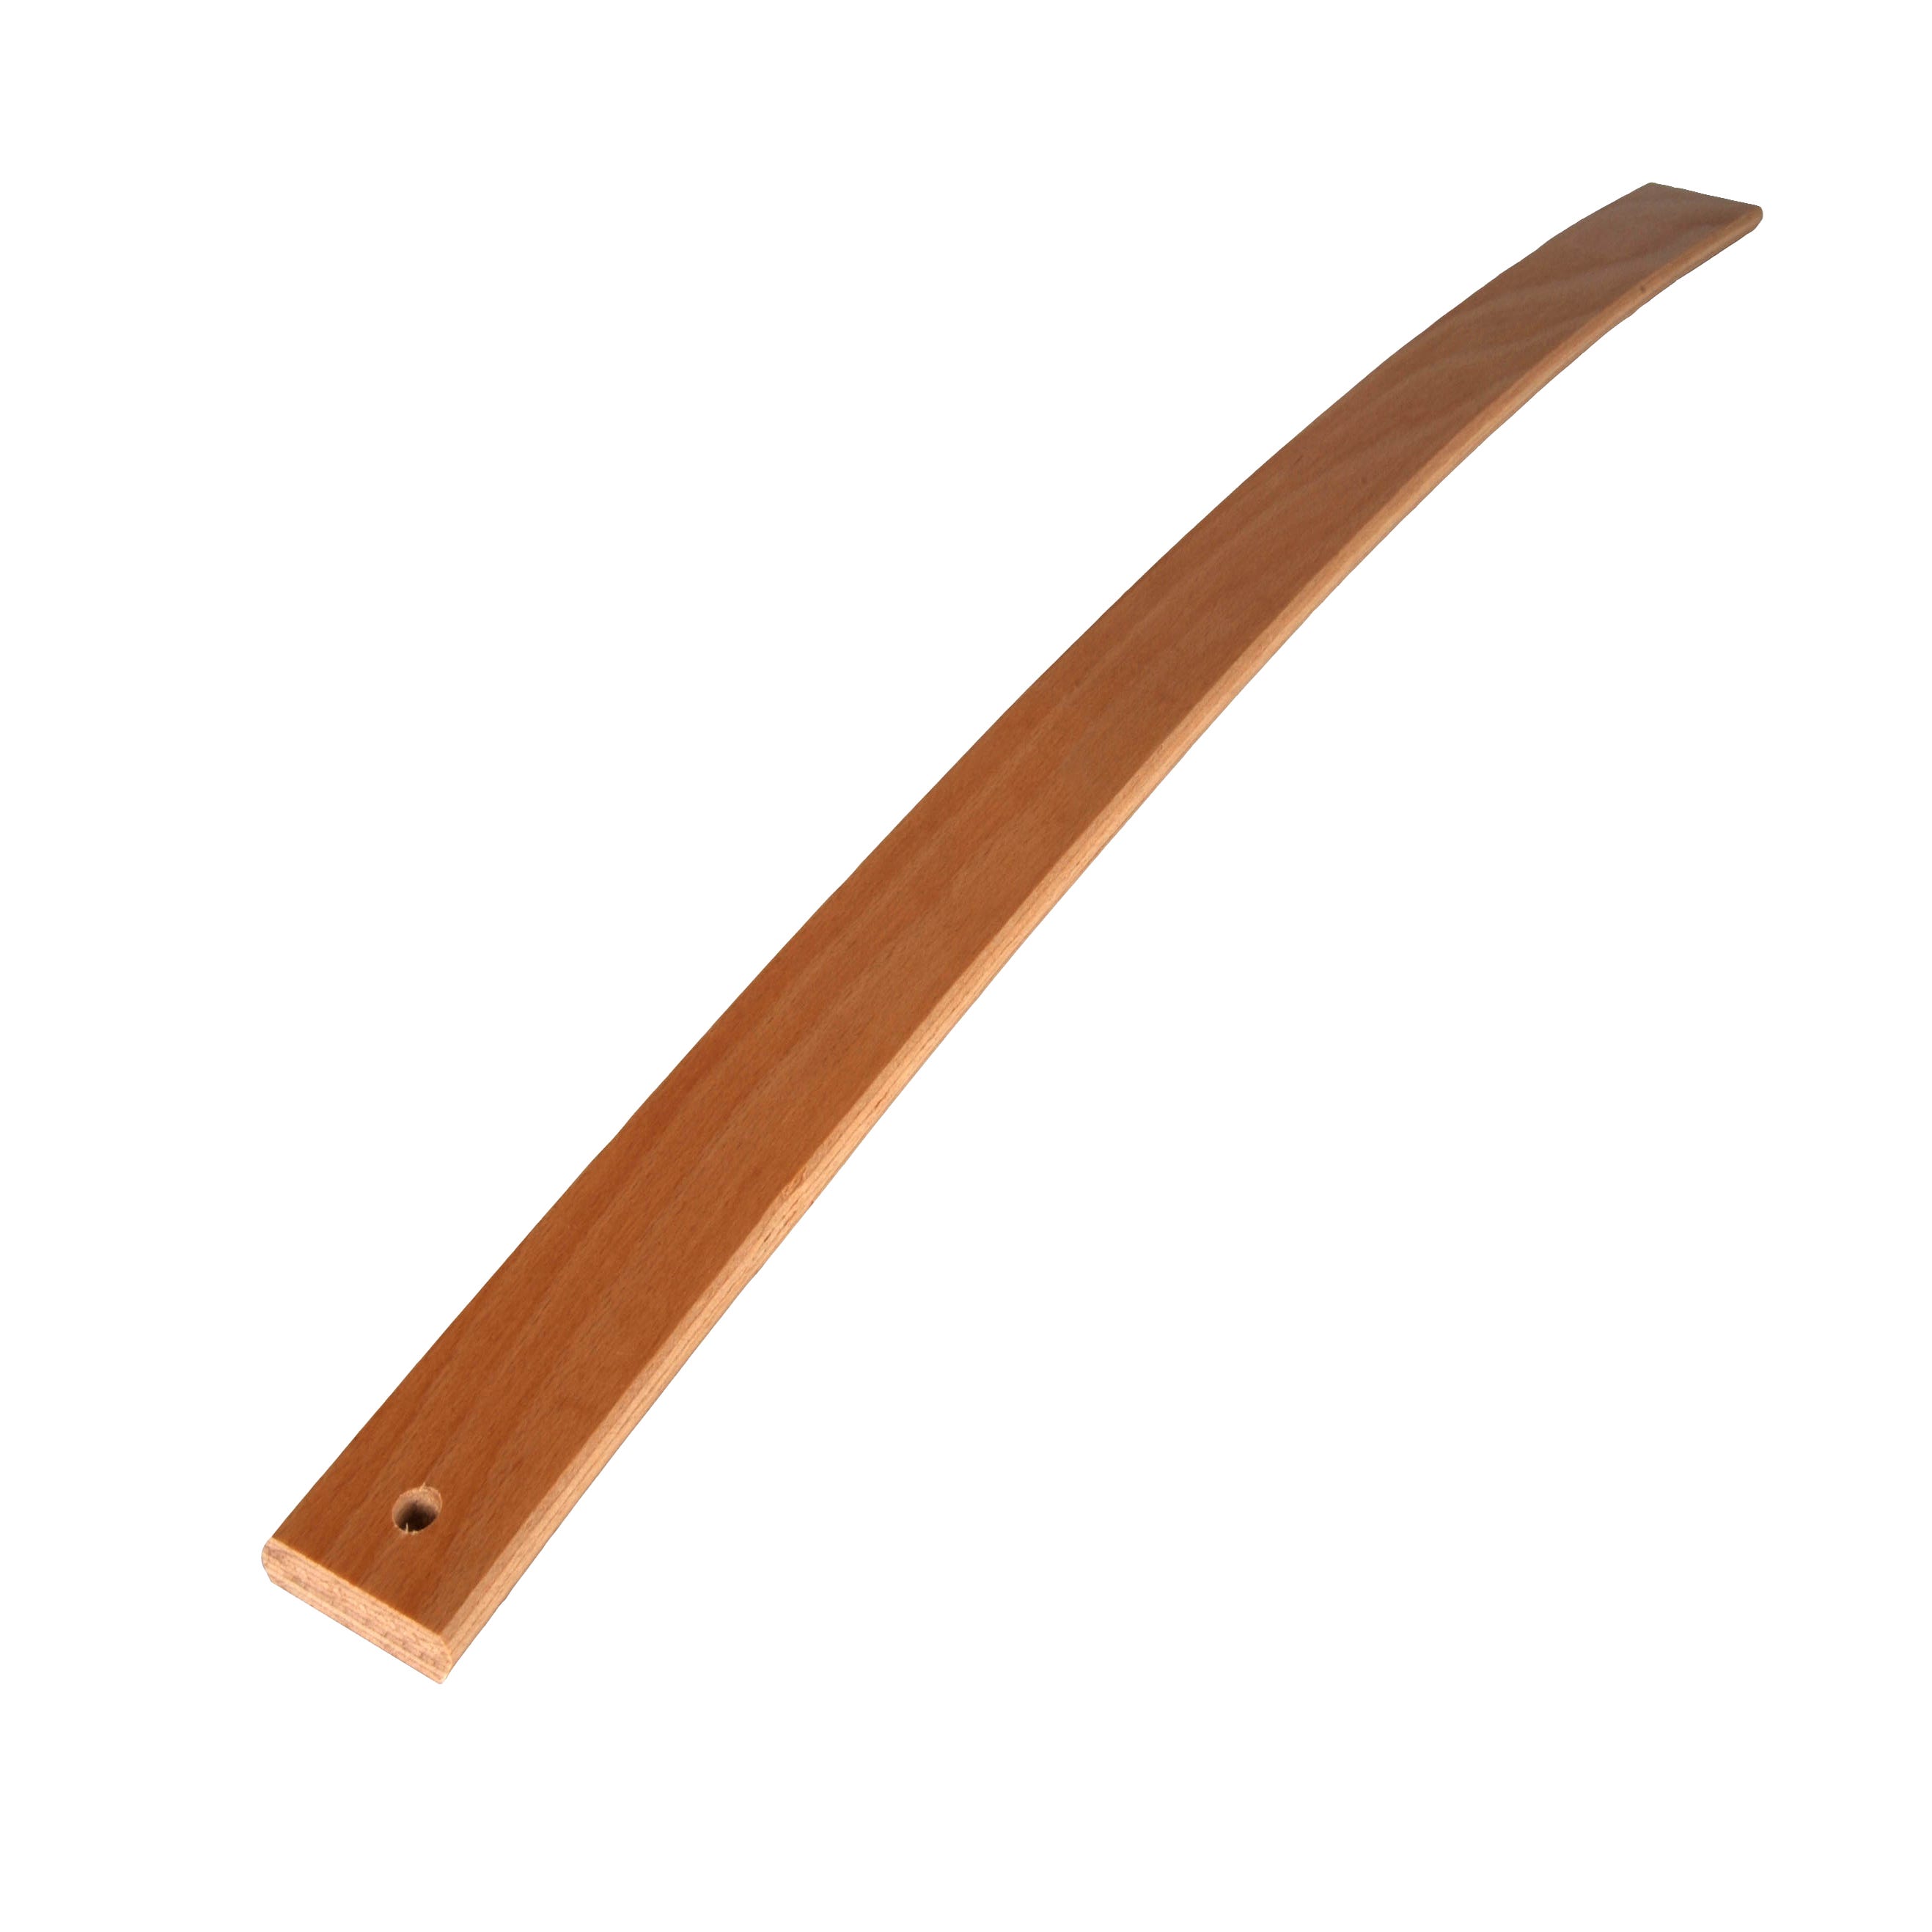 Lama de somier de madera 900x53x8mm (largo x ancho x espesor)